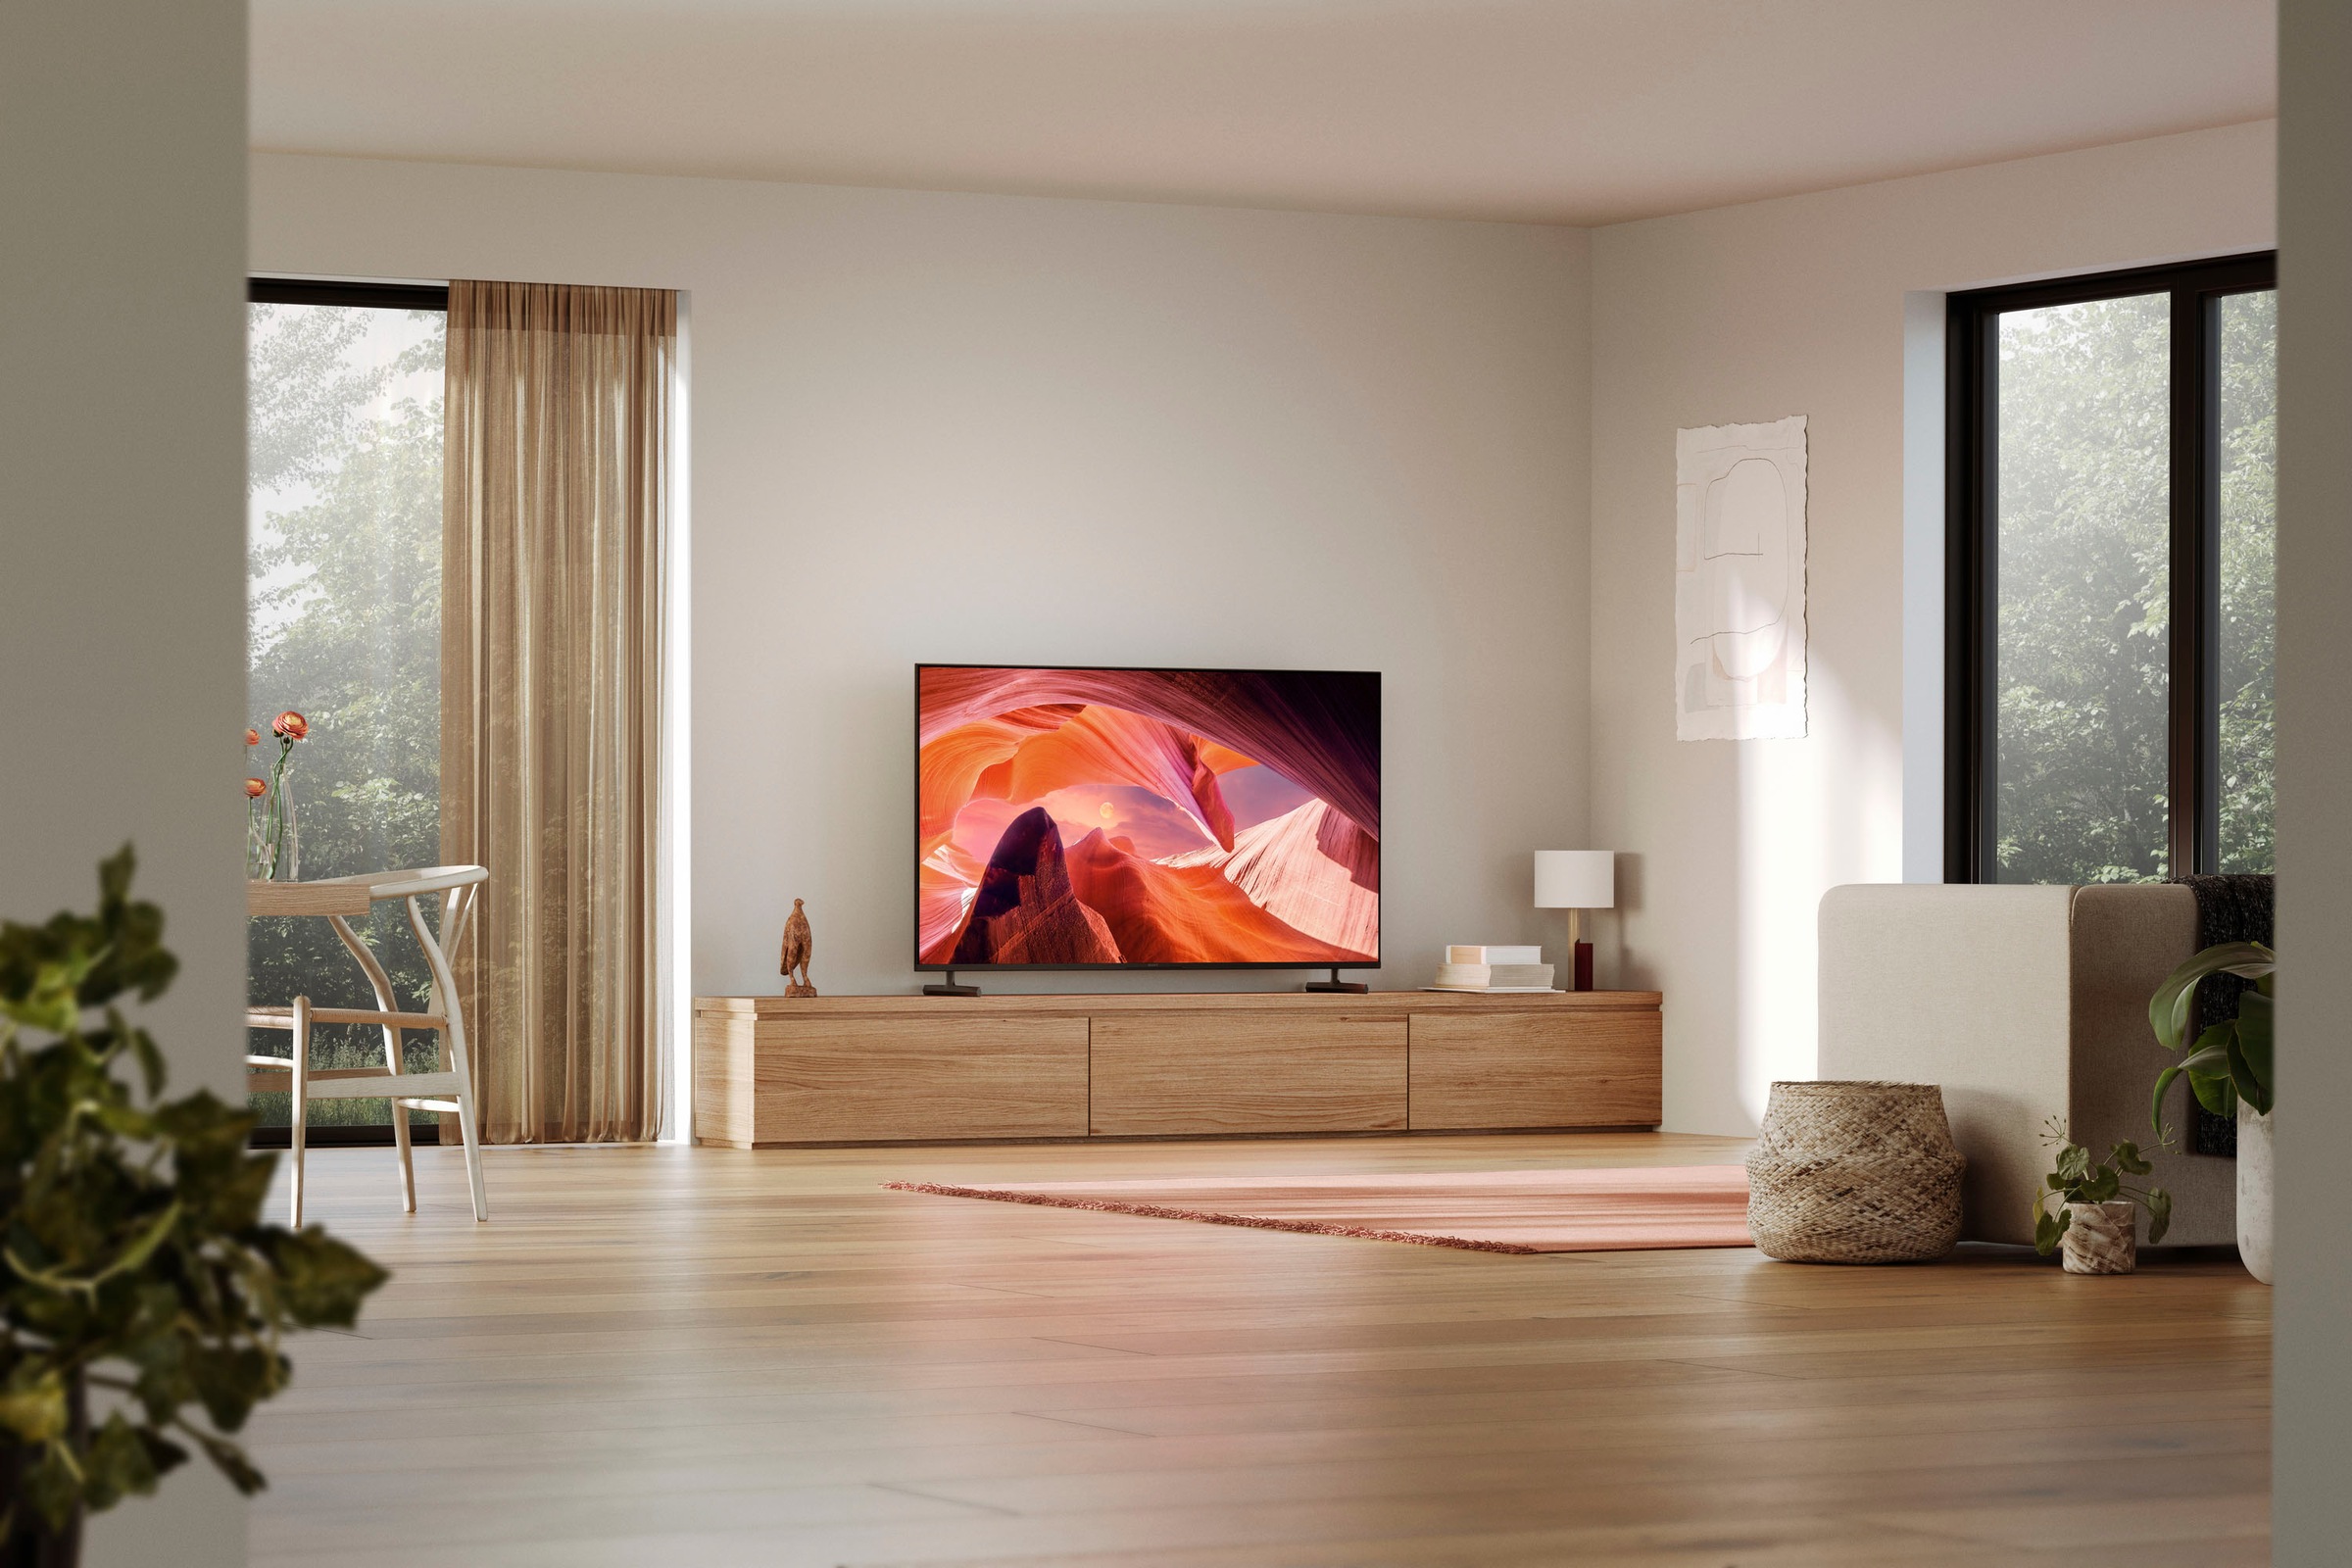 Sony LED-Fernseher »KD-43X80L«, 108 cm/43 Zoll, 4K Ultra HD, Google TV-Smart-TV, HDR, X1-Prozessor, Sprachsuche,BRAVIACore, Triluminos Pro, Gaming-Menü